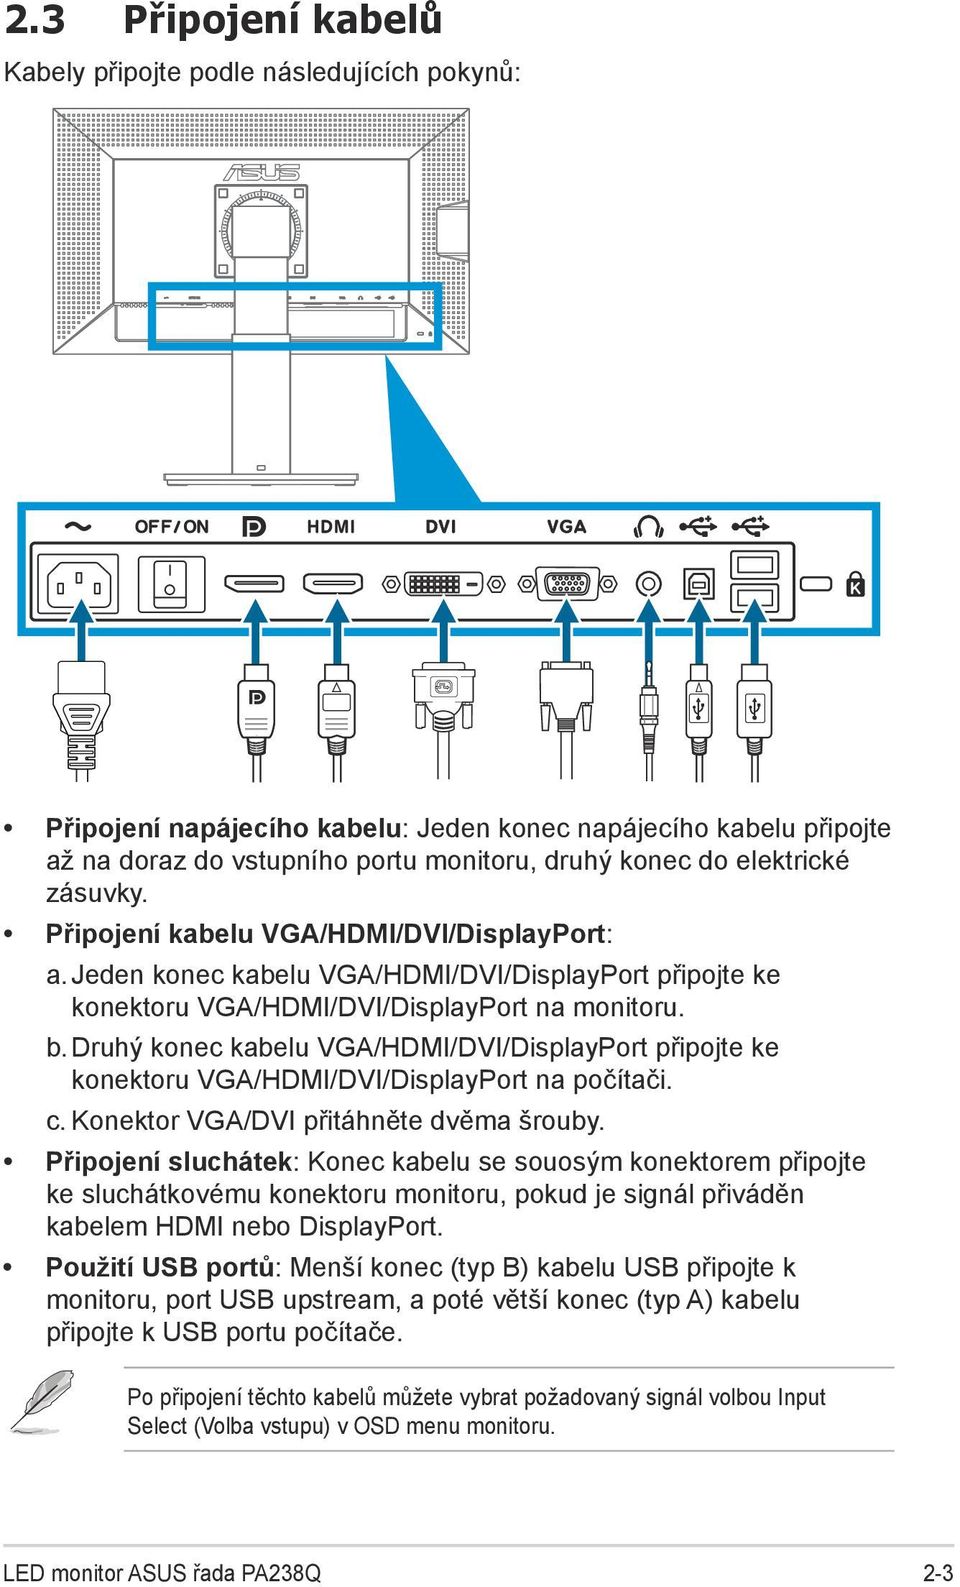 Druhý konec kabelu VGA/HDMI/DVI/DisplayPort připojte ke konektoru VGA/HDMI/DVI/DisplayPort na počítači. c. Konektor VGA/DVI přitáhněte dvěma šrouby.